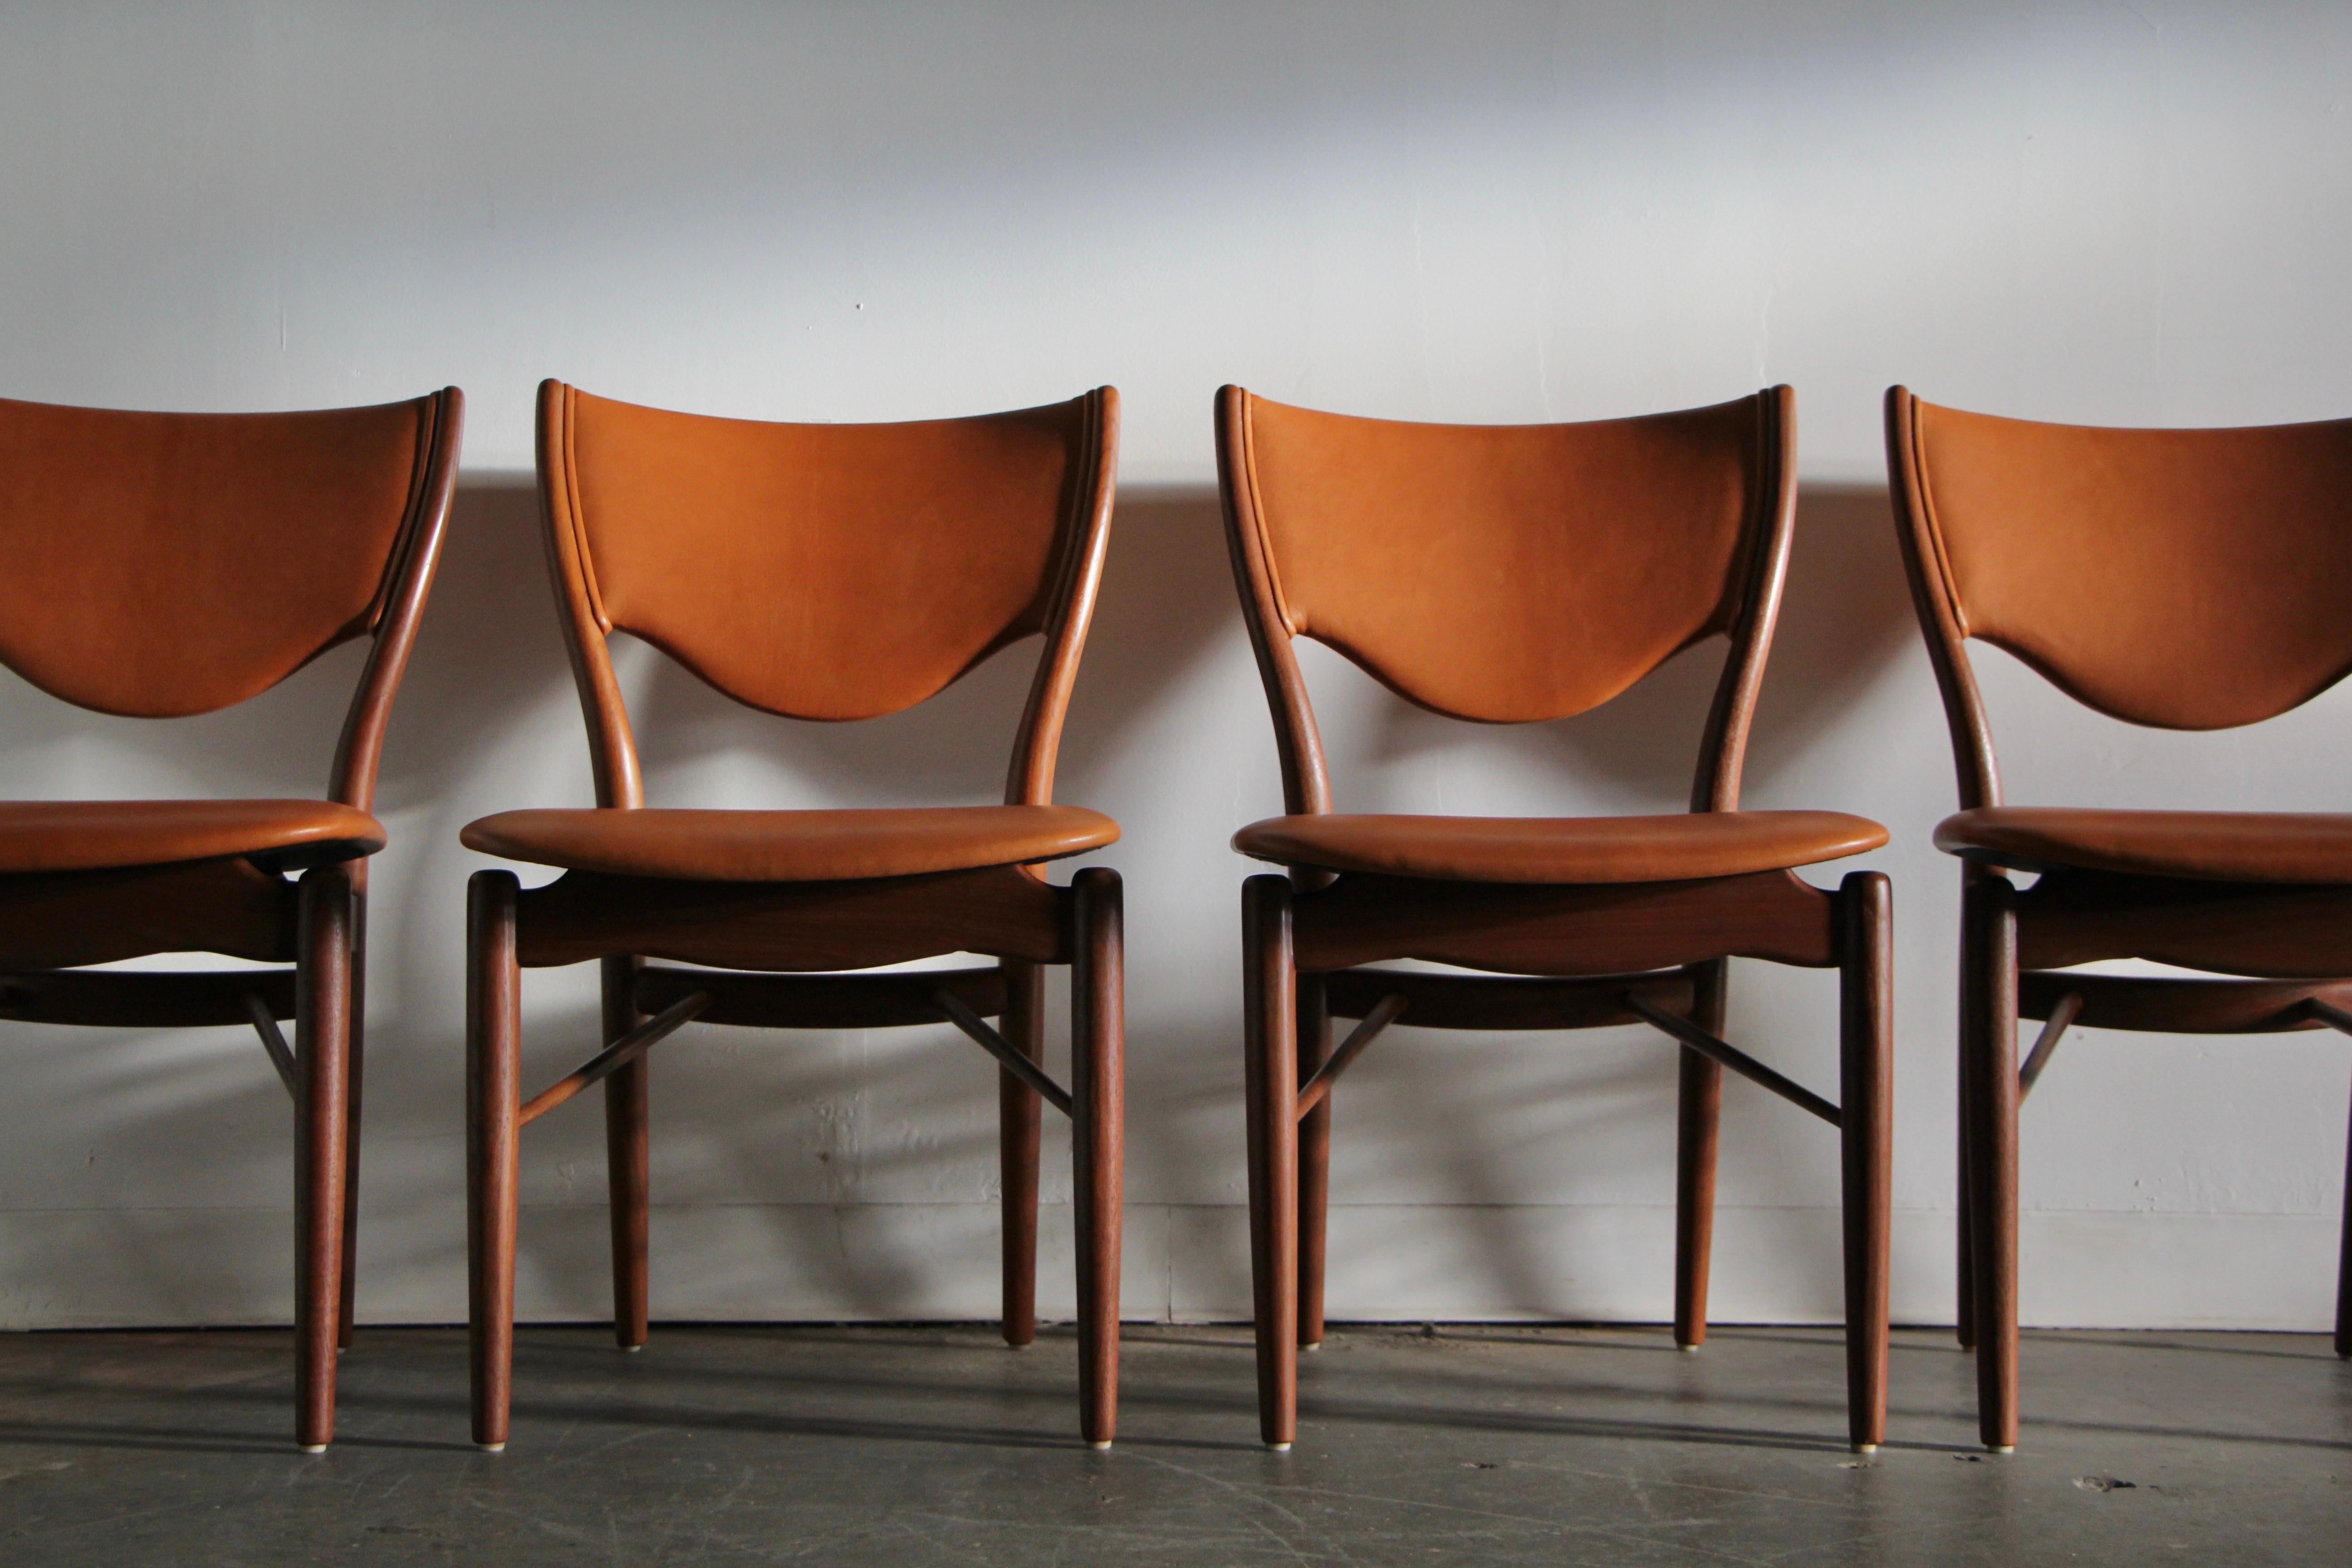 Mid-Century Modern Finn Juhl “BO 63” Sculpted Teak Dining Chairs in Cognac Goatskin Leather, 1950s For Sale